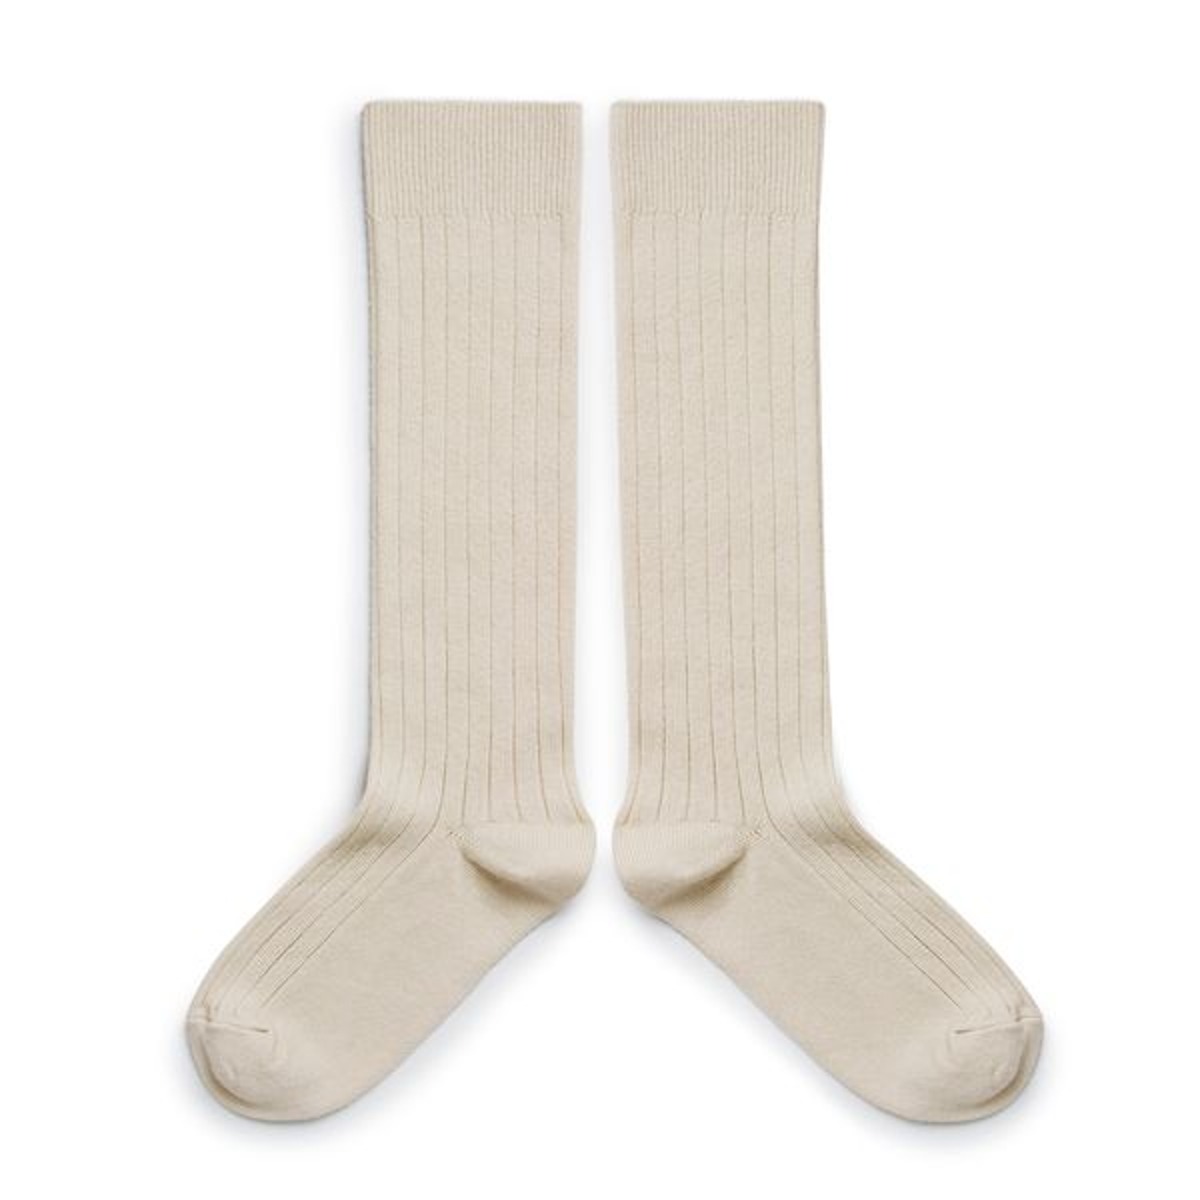 La Haute - Ribbed Knee-high Socks - #037(28-31배송지연2주소요)